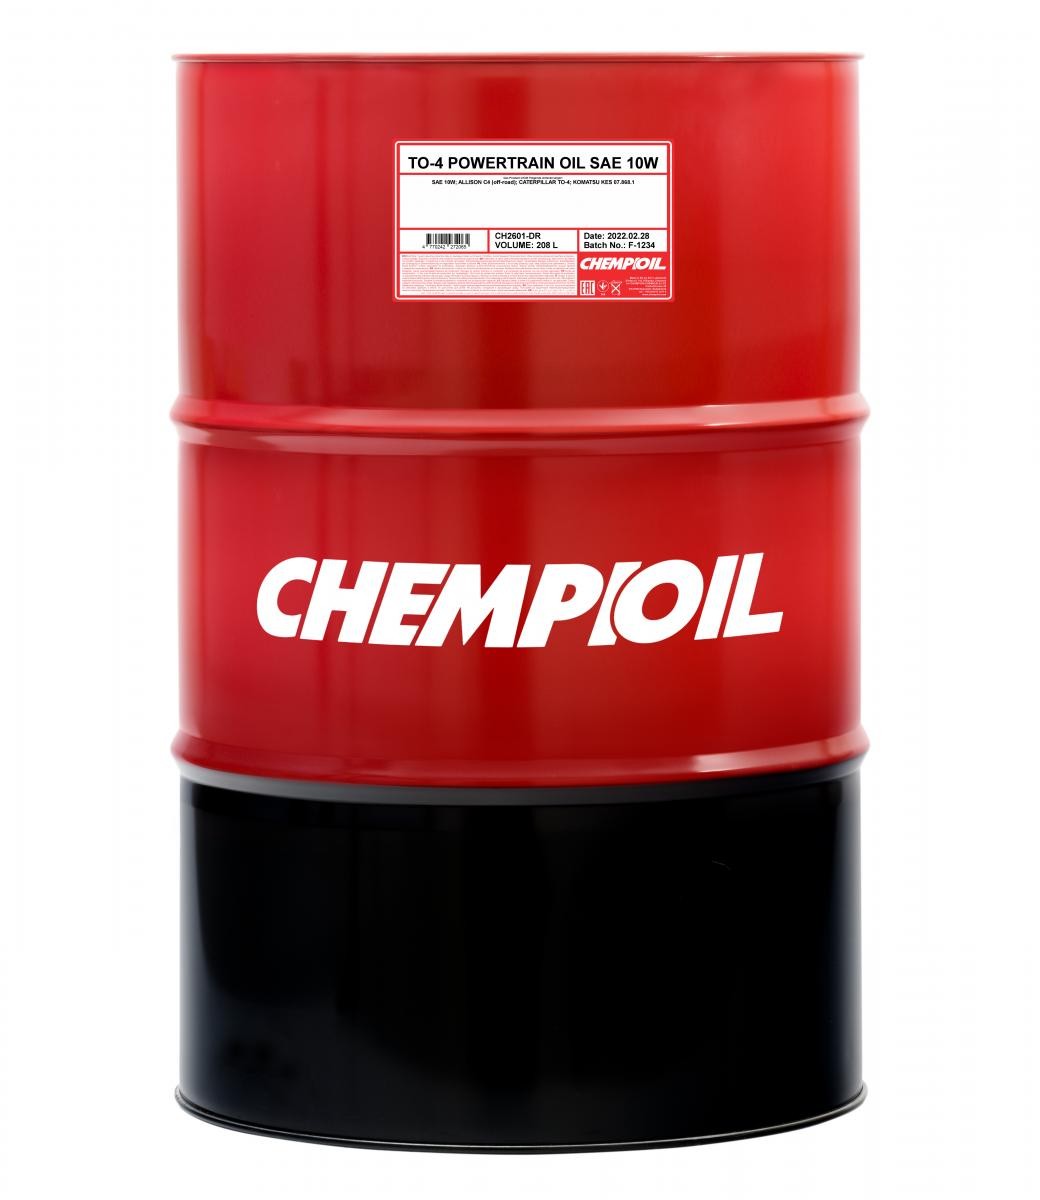 Motorenöl SAE 10 longlife Diesel - CH2601-DR CHEMPIOIL POWERTRAIN OIL, TO-4